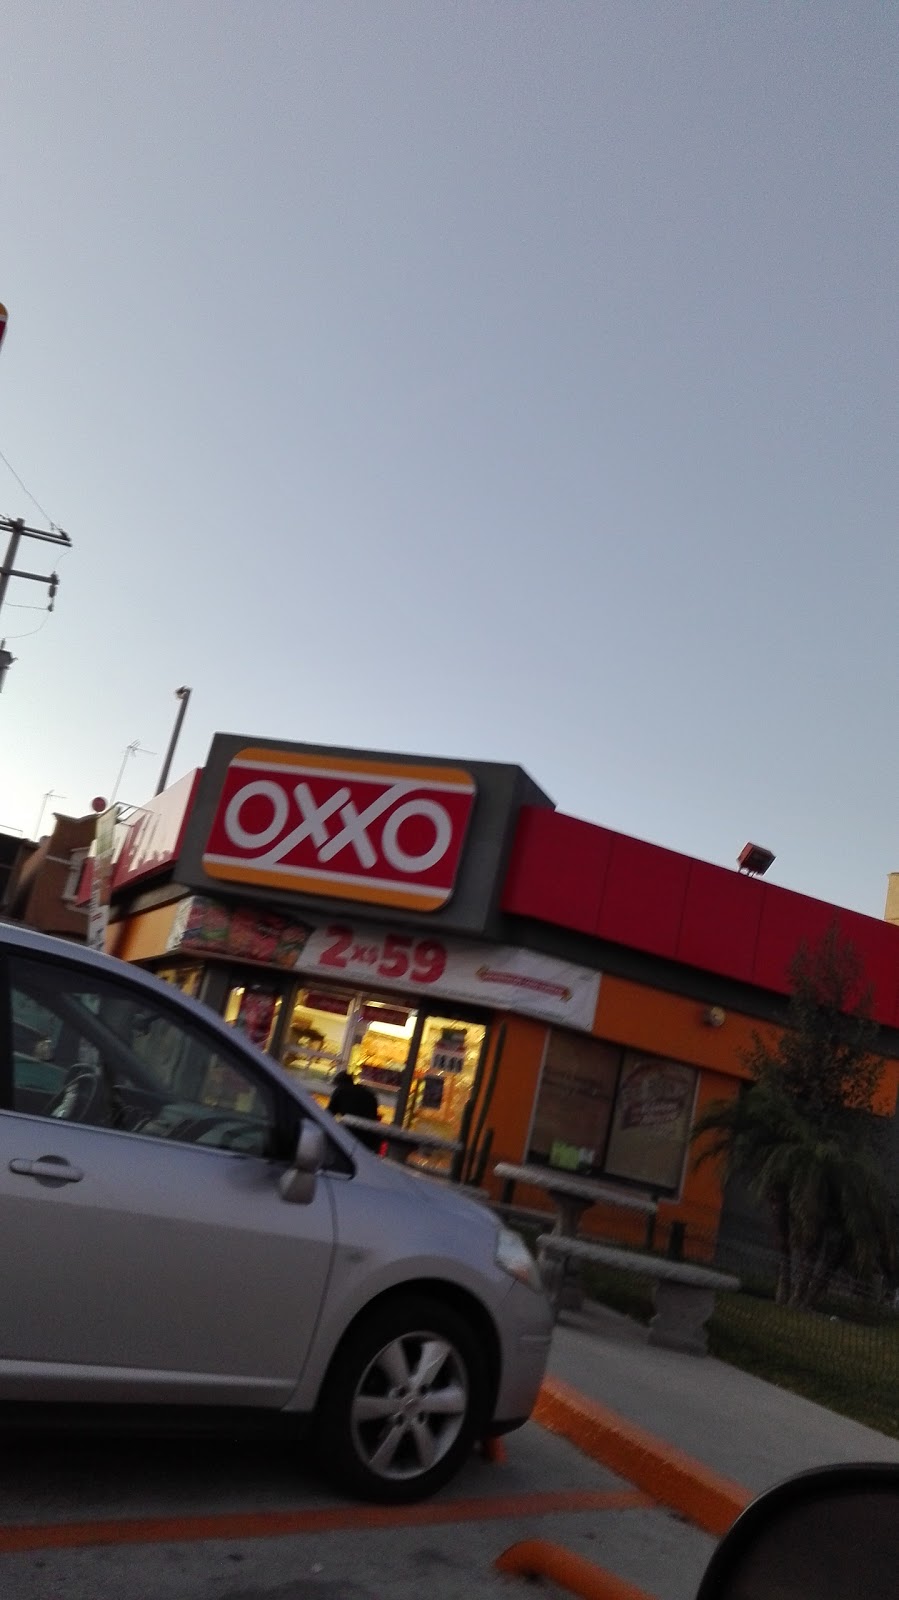 OXXO | Calle Jacaranda 4332, Porticos De San Antonio, 22666 Tijuana, B.C., Mexico | Phone: 81 8320 2020